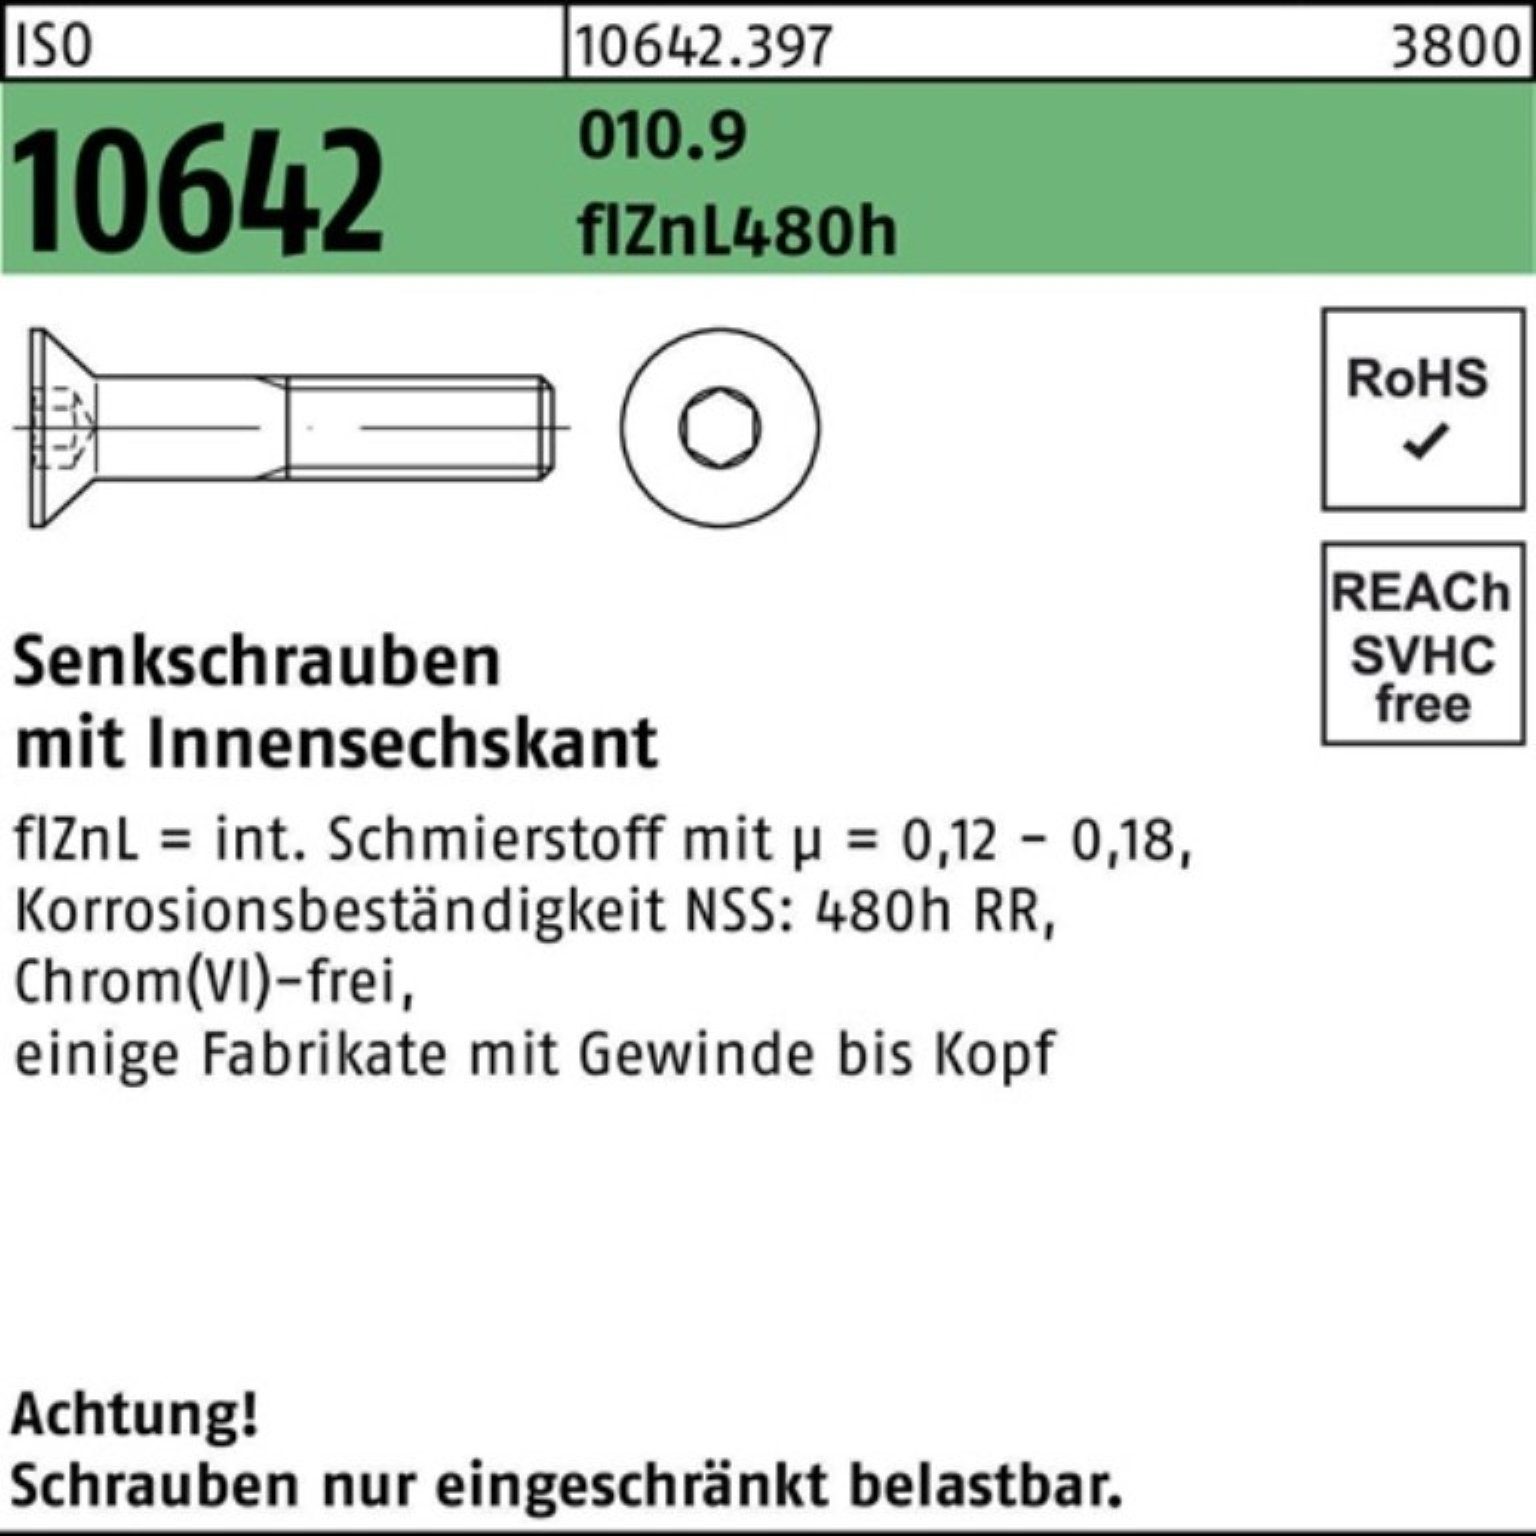 Senkschraube ISO flZnL 480h 010.9 zin Reyher 200er Senkschraube Pack M8x35 10642 Innen-6kt